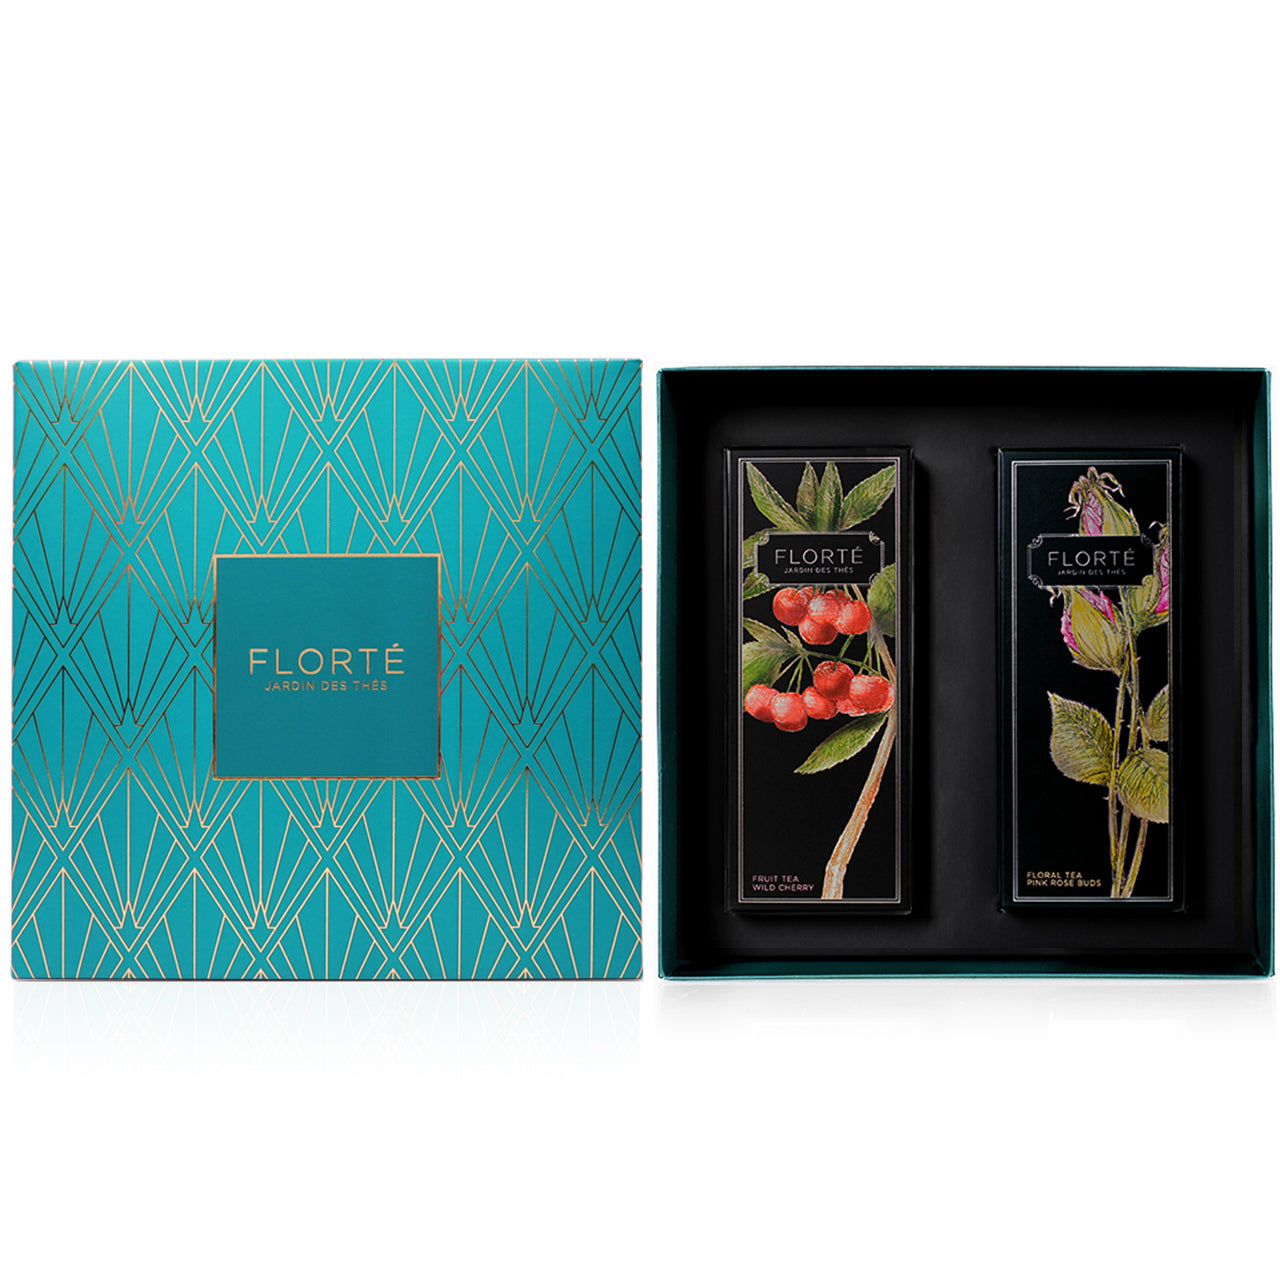 Florté Gift Set with 2 Loose Teas